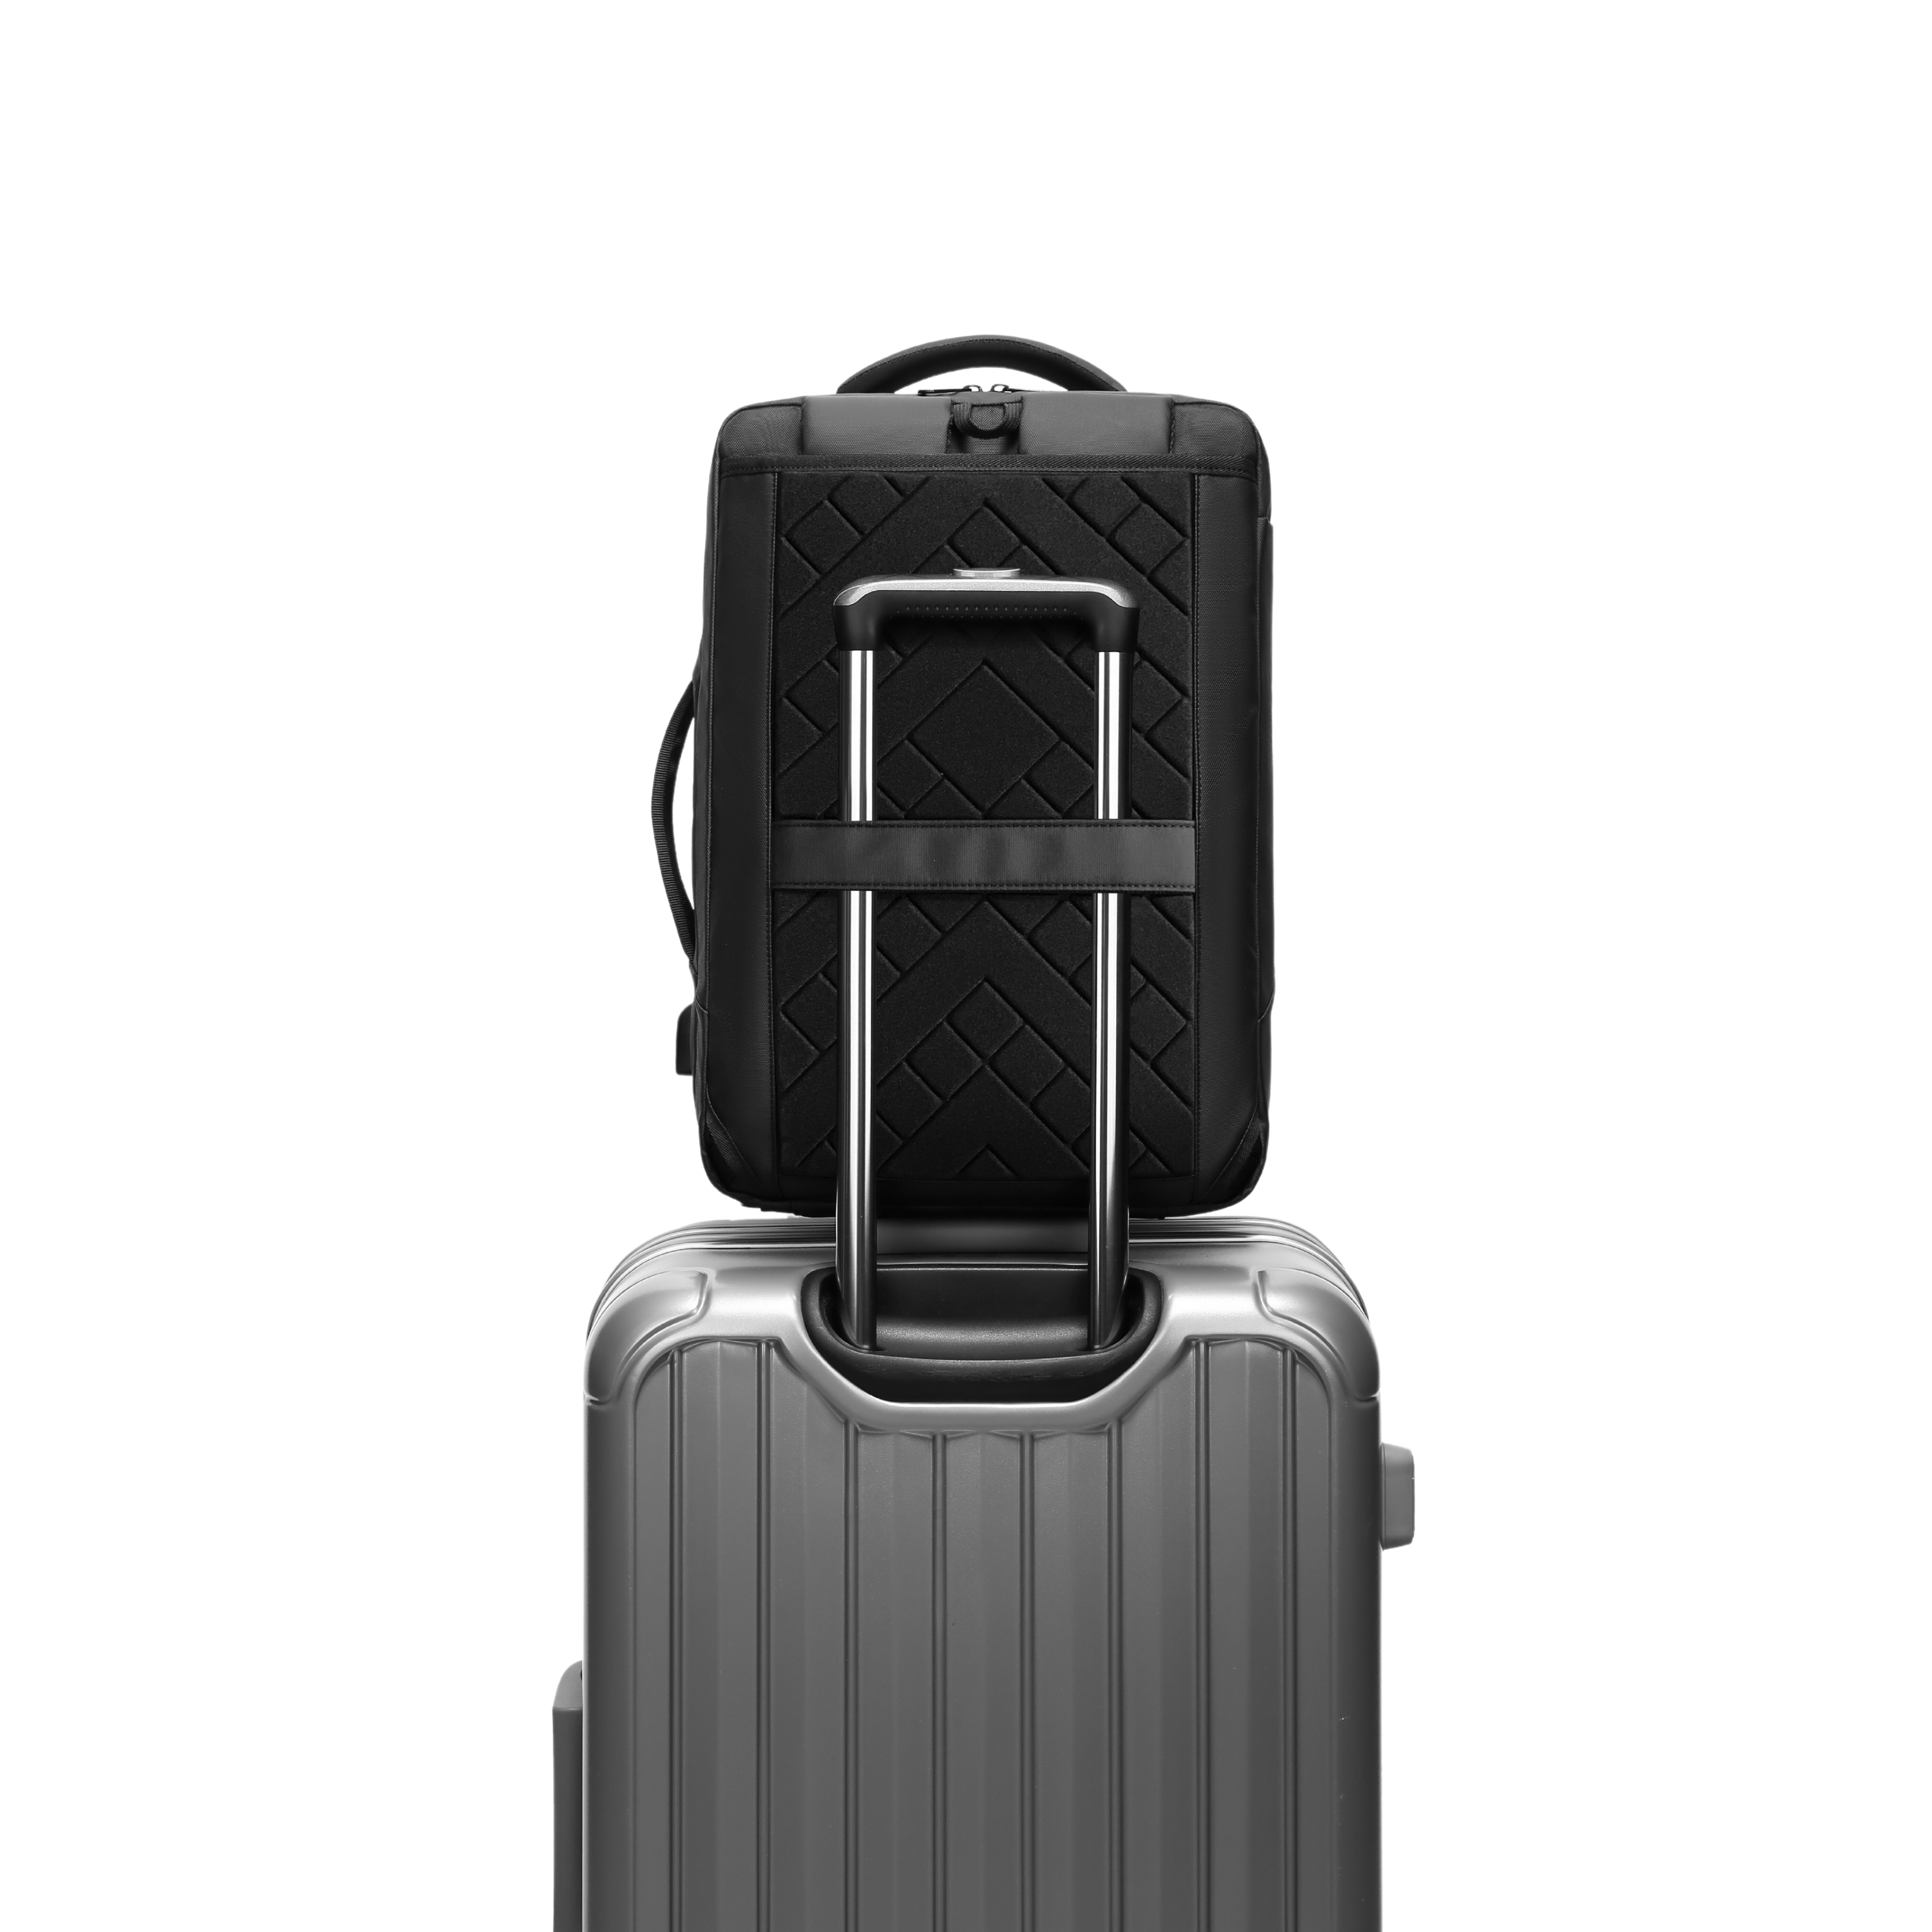 Mochila Xclusive Executive Backpack arriba de una maleta